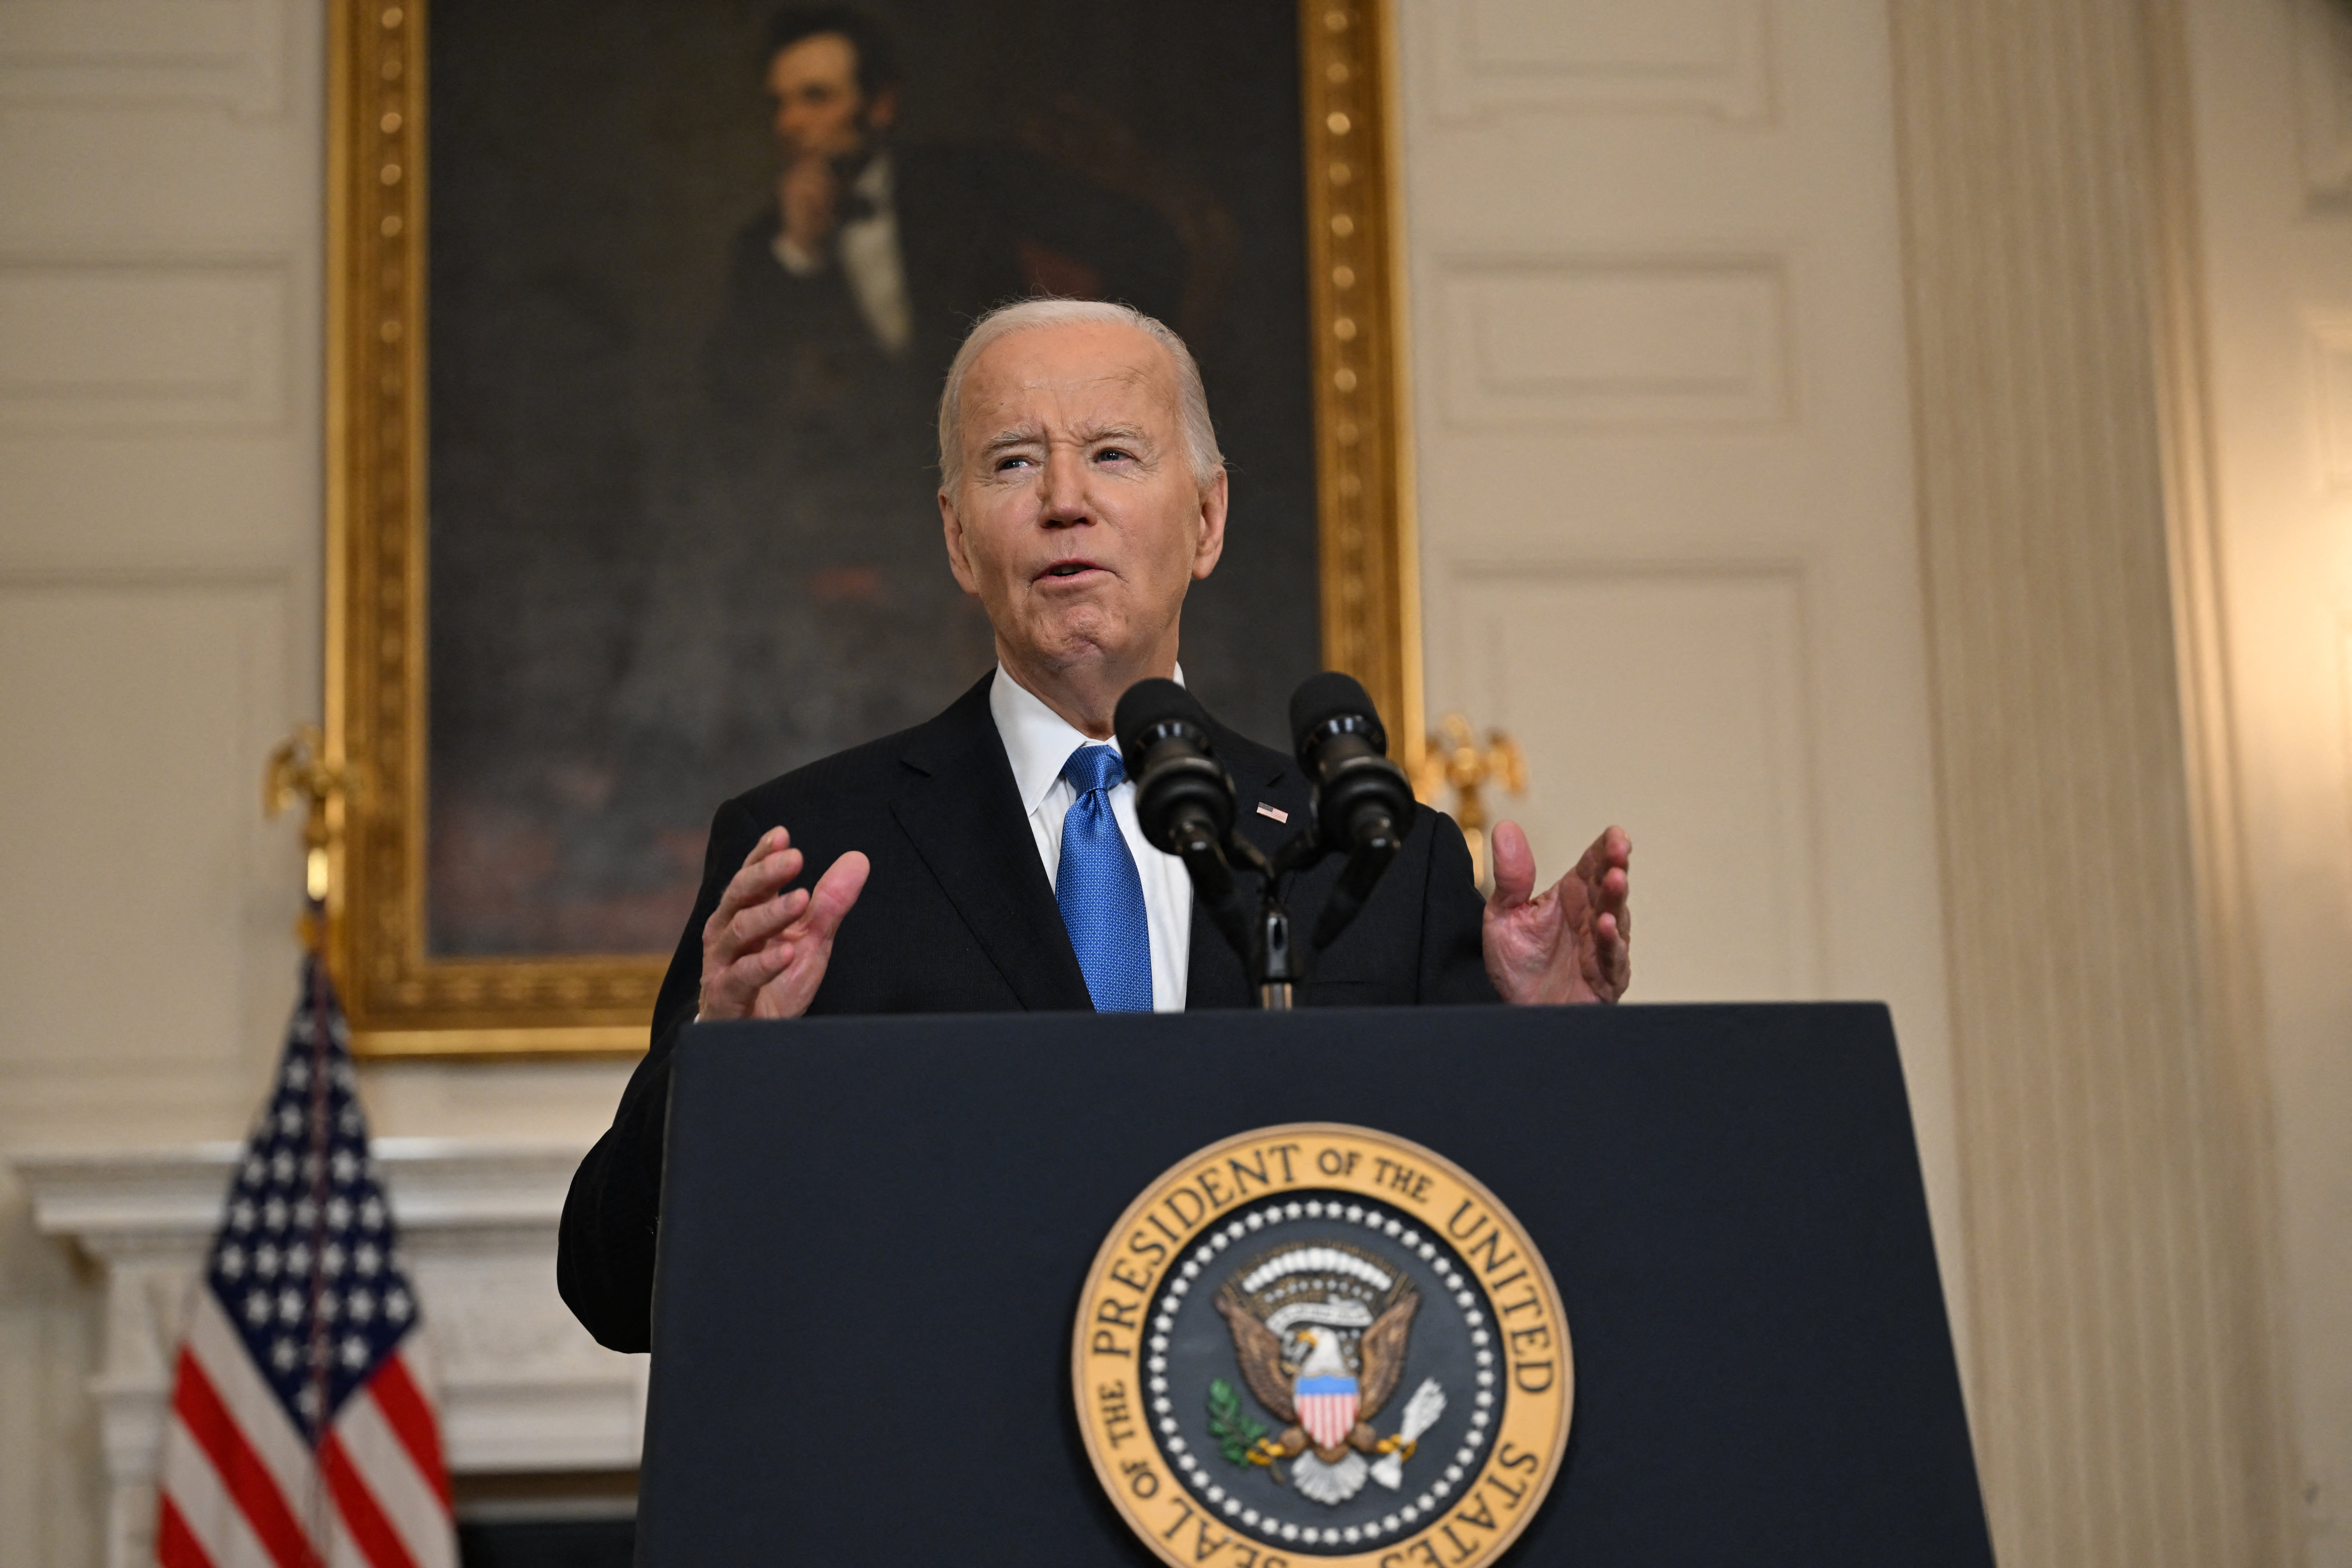 Current president Joe Biden ranked 14th among the 45 presidents